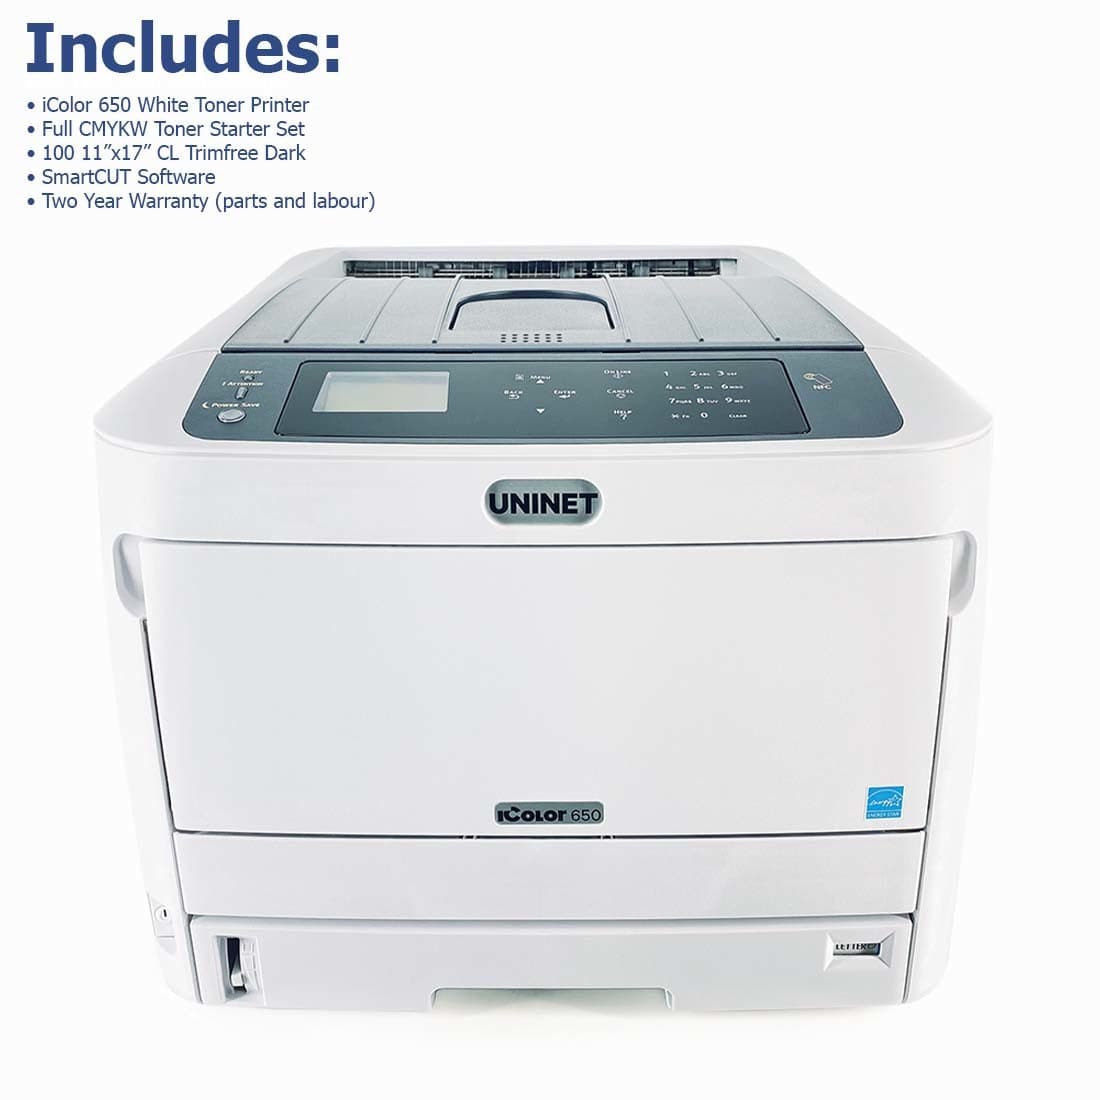 iColor 650 White Toner Printer - Joto Imaging Supplies US